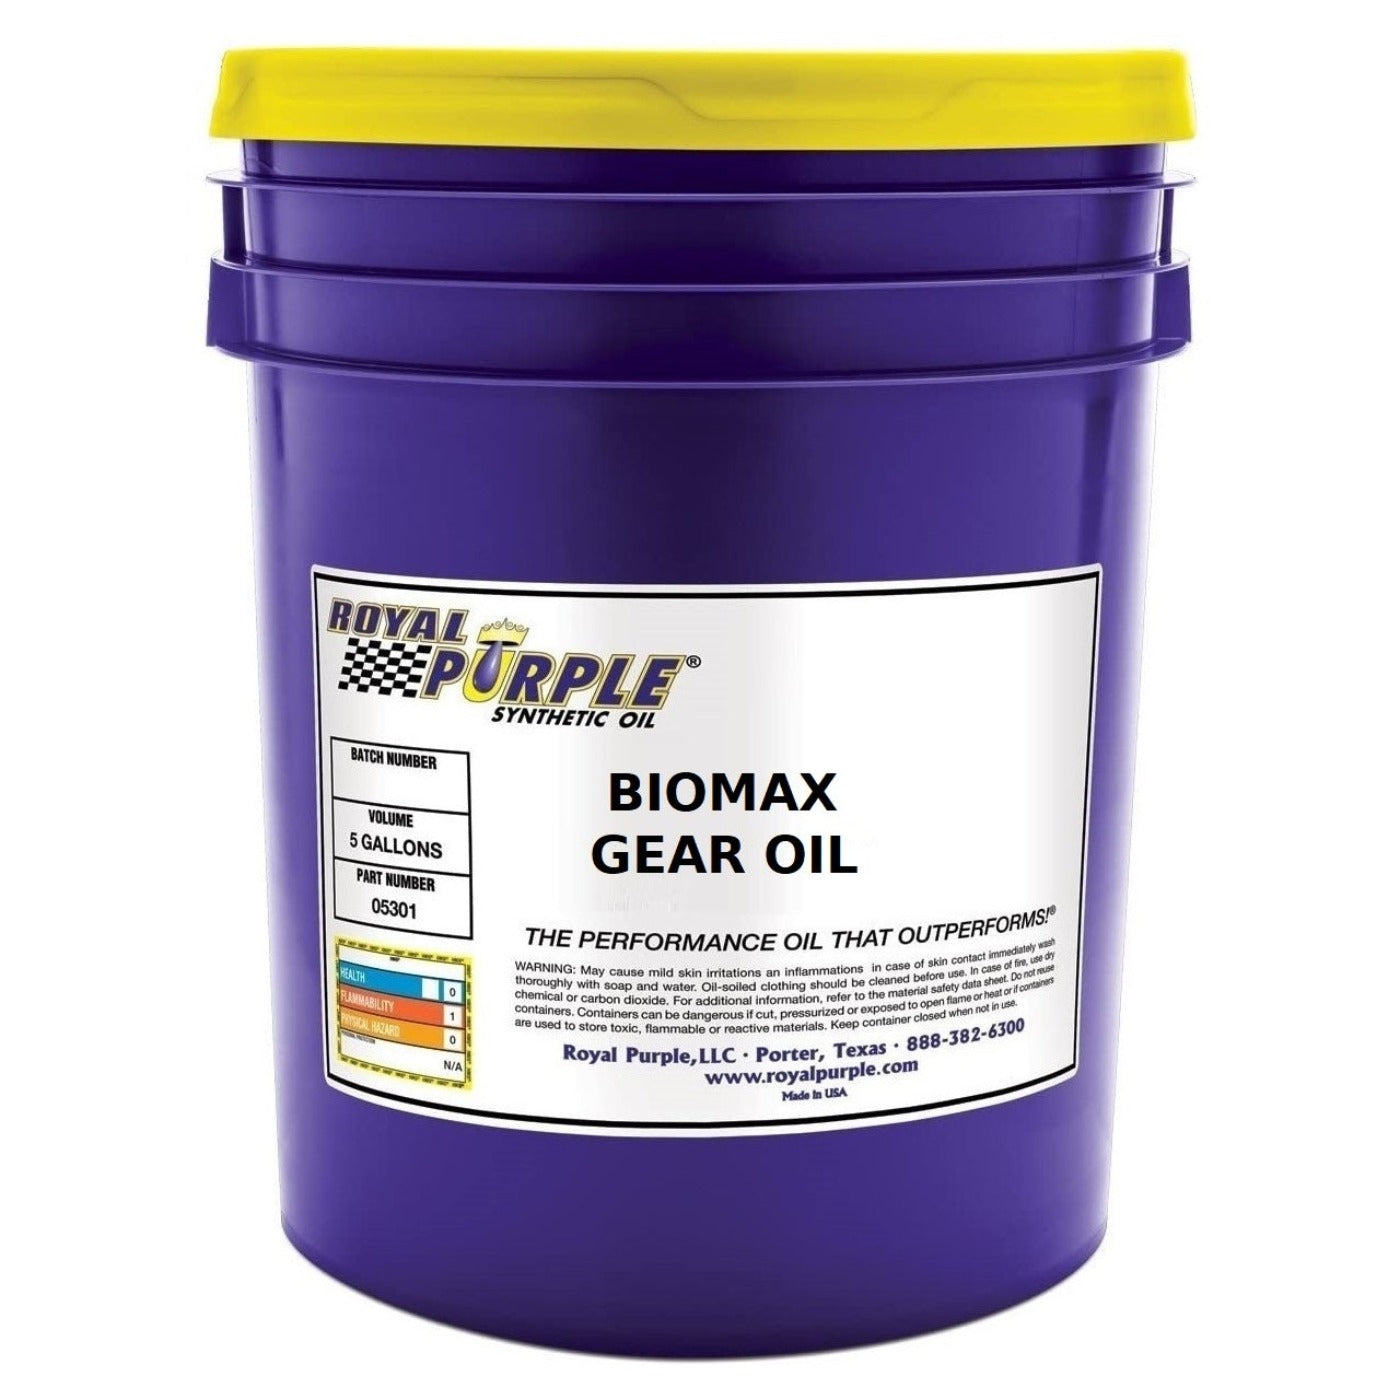 Biomax Gear Oil